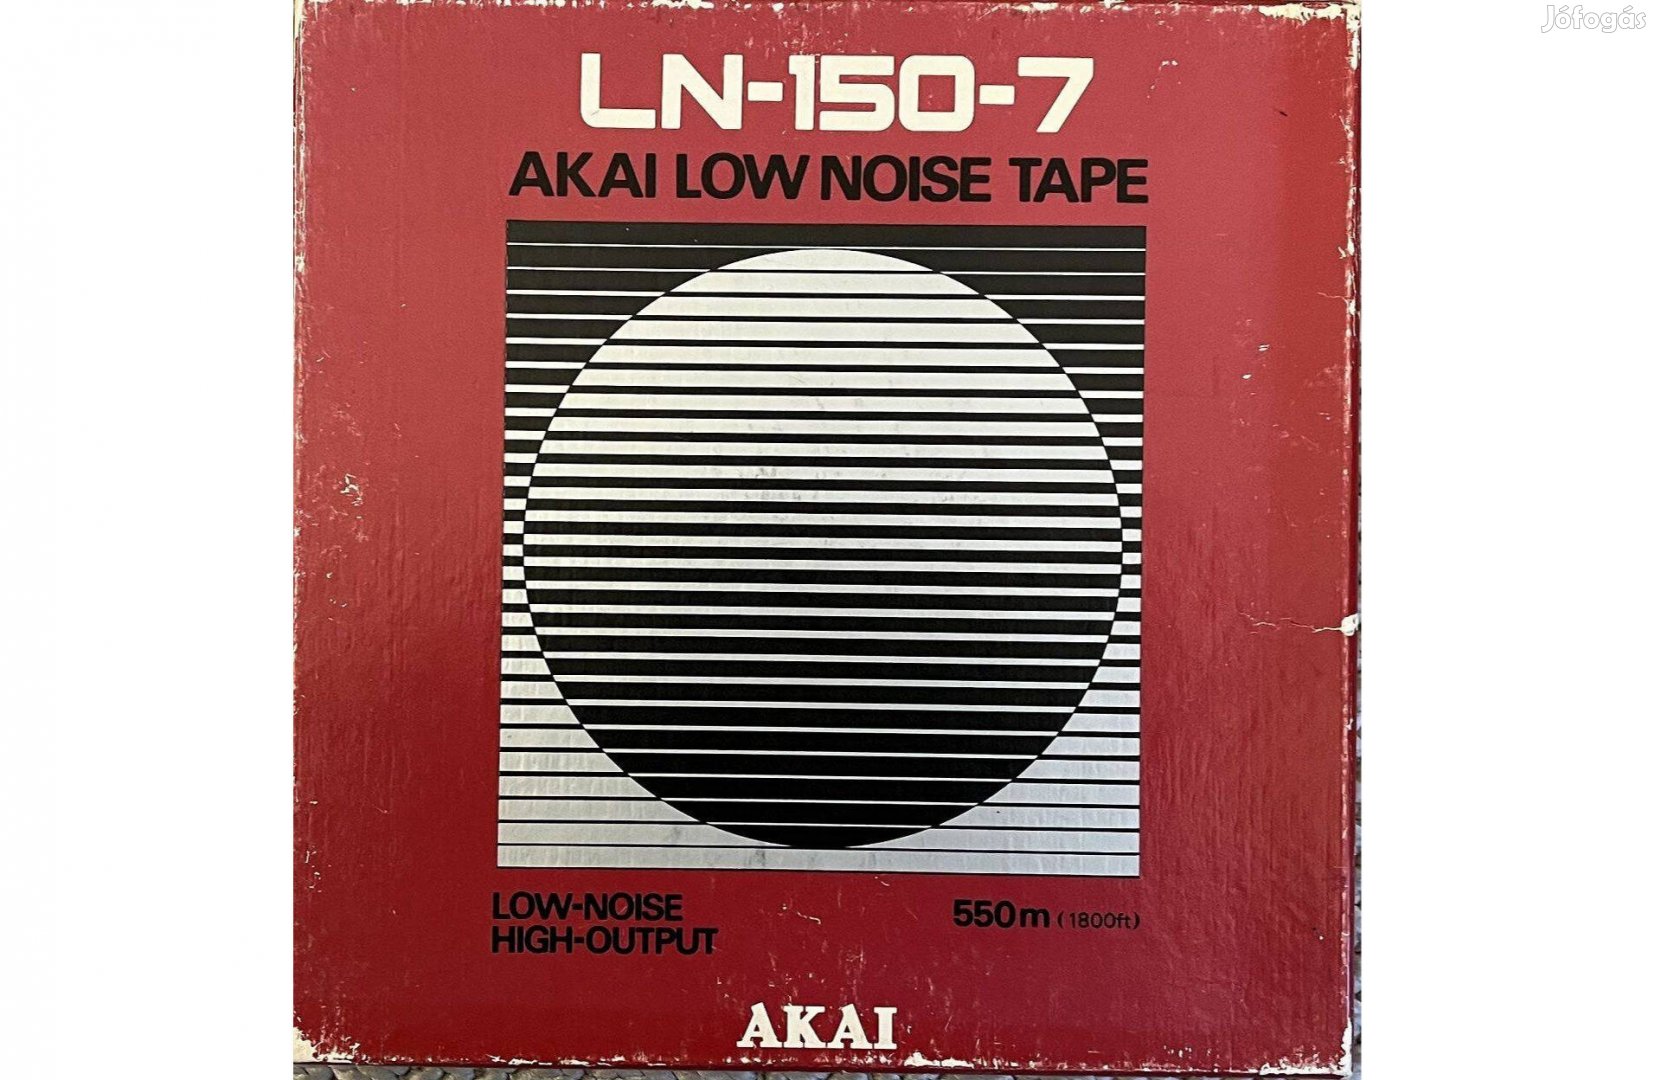 Akai LOW Noise Tape LN-150-7 550m magnószalag magnetofon szalag orsós